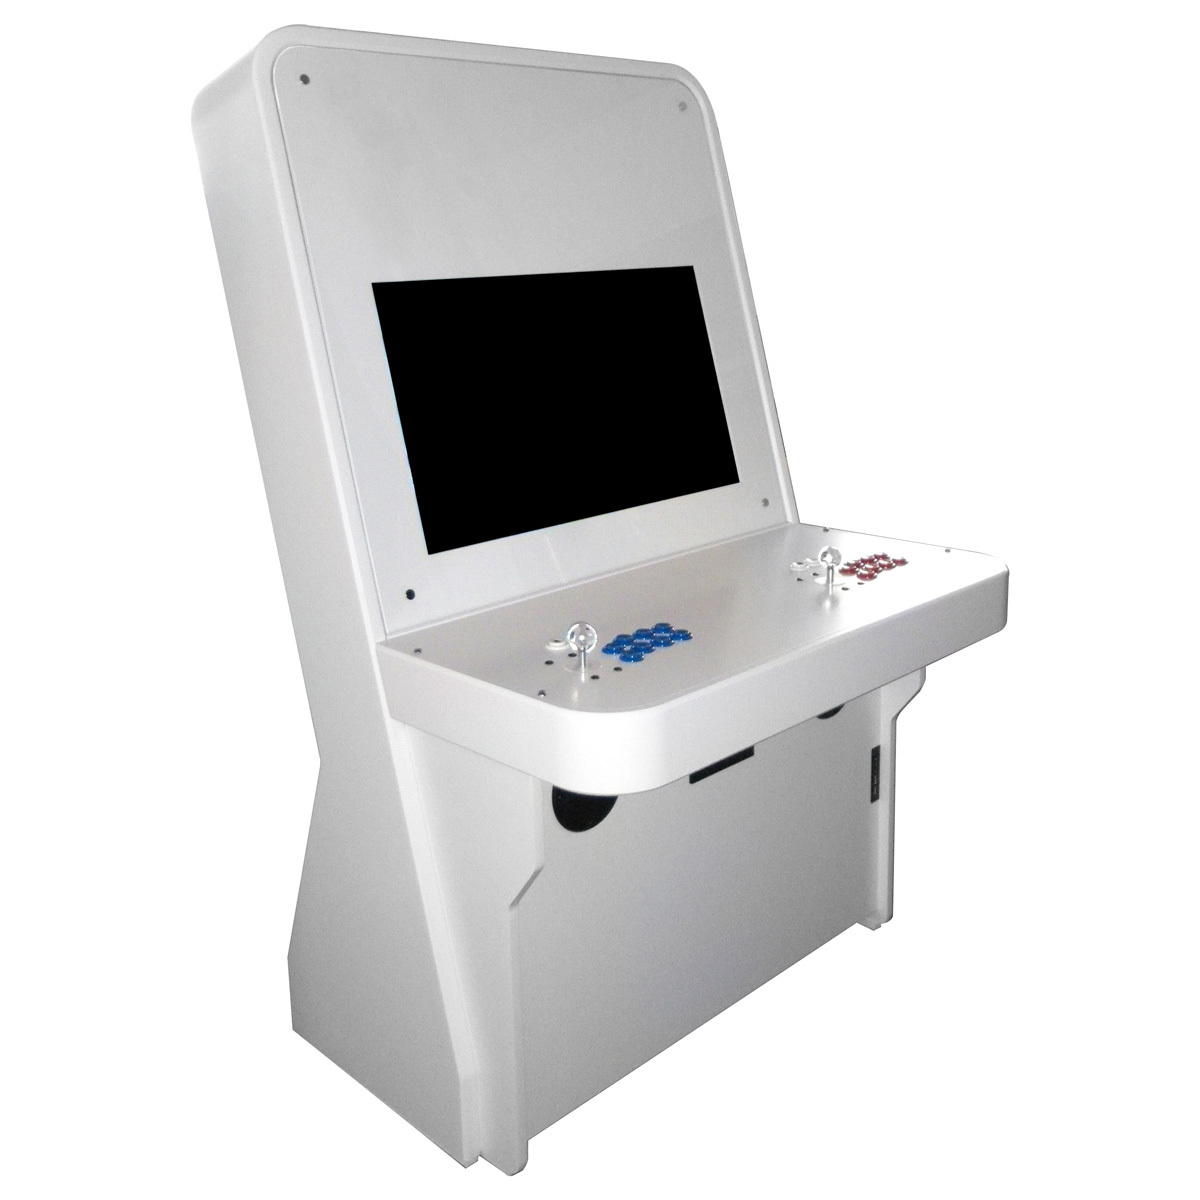 Arcade Overloard Next Gen Arcade Machine In 2 Editions Costco Uk